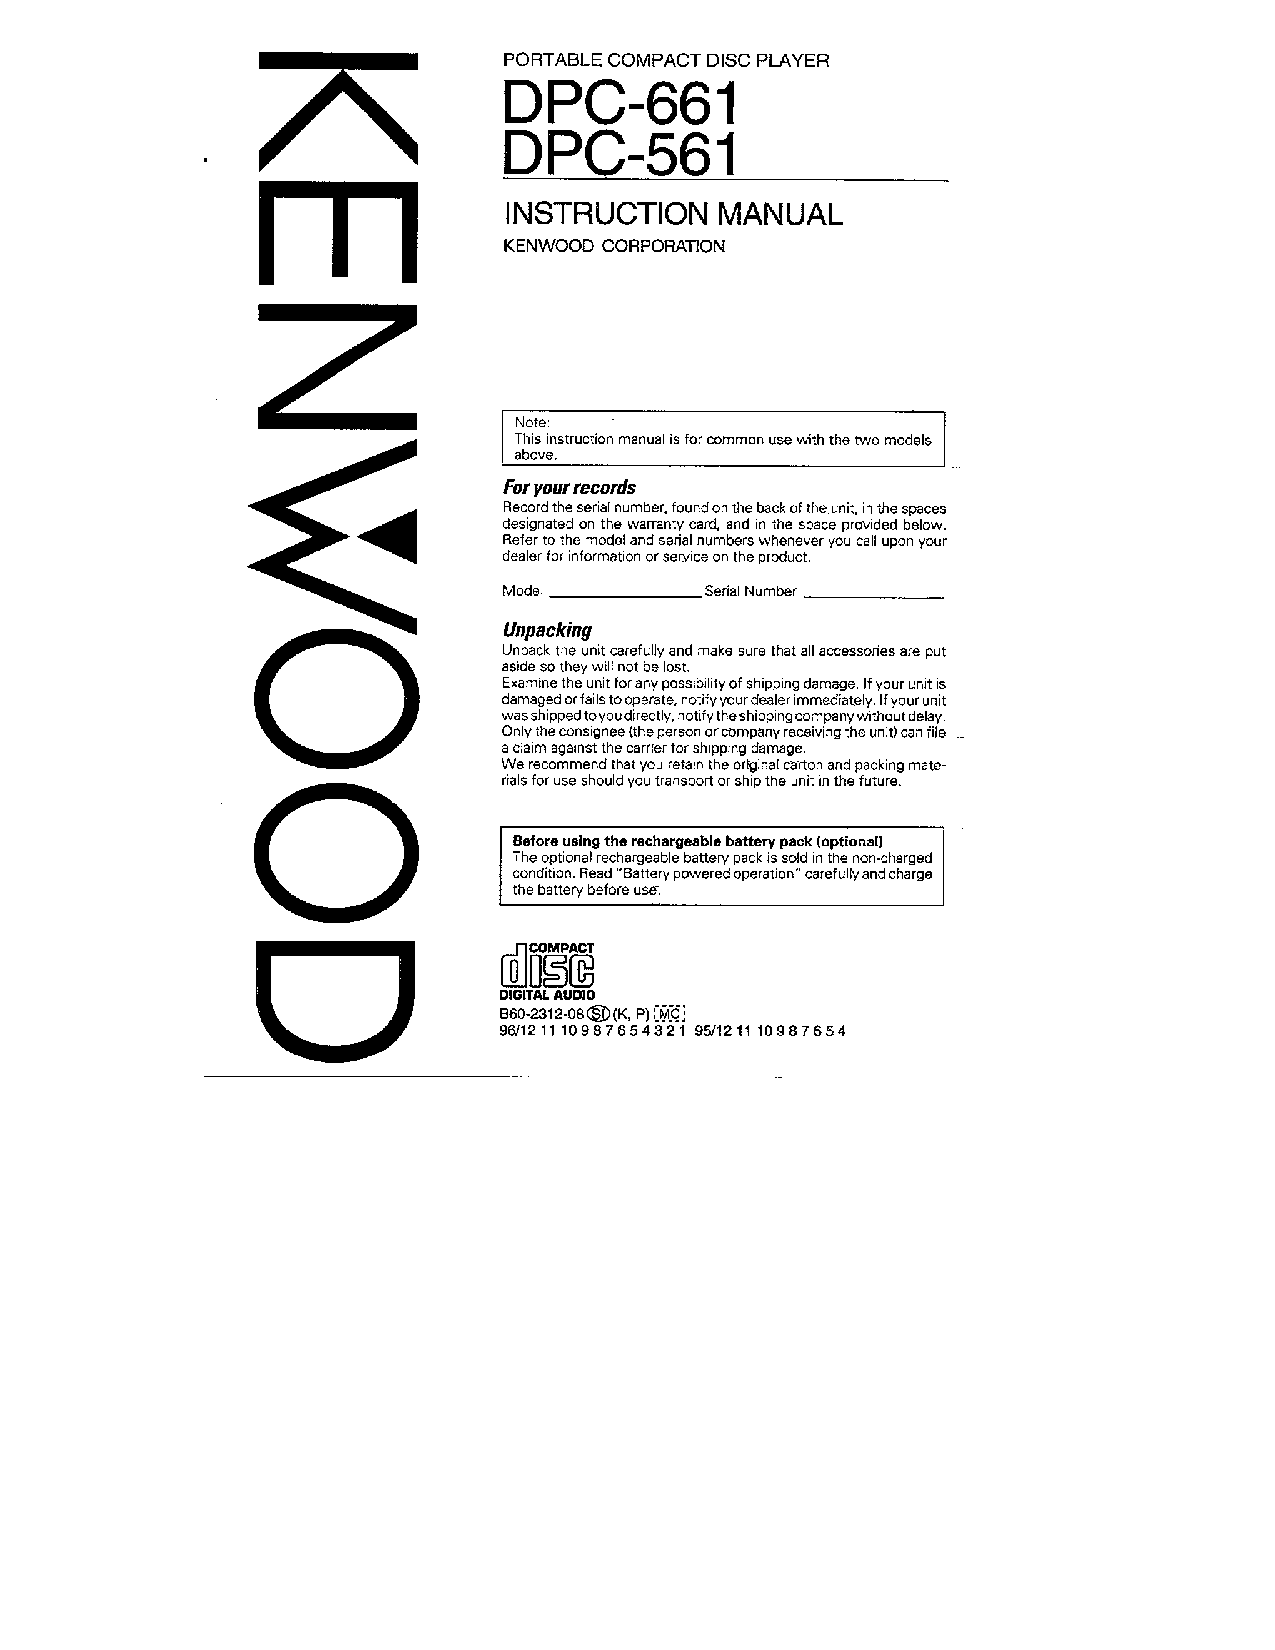 Kenwood DPC-561, DPC-661 User Manual